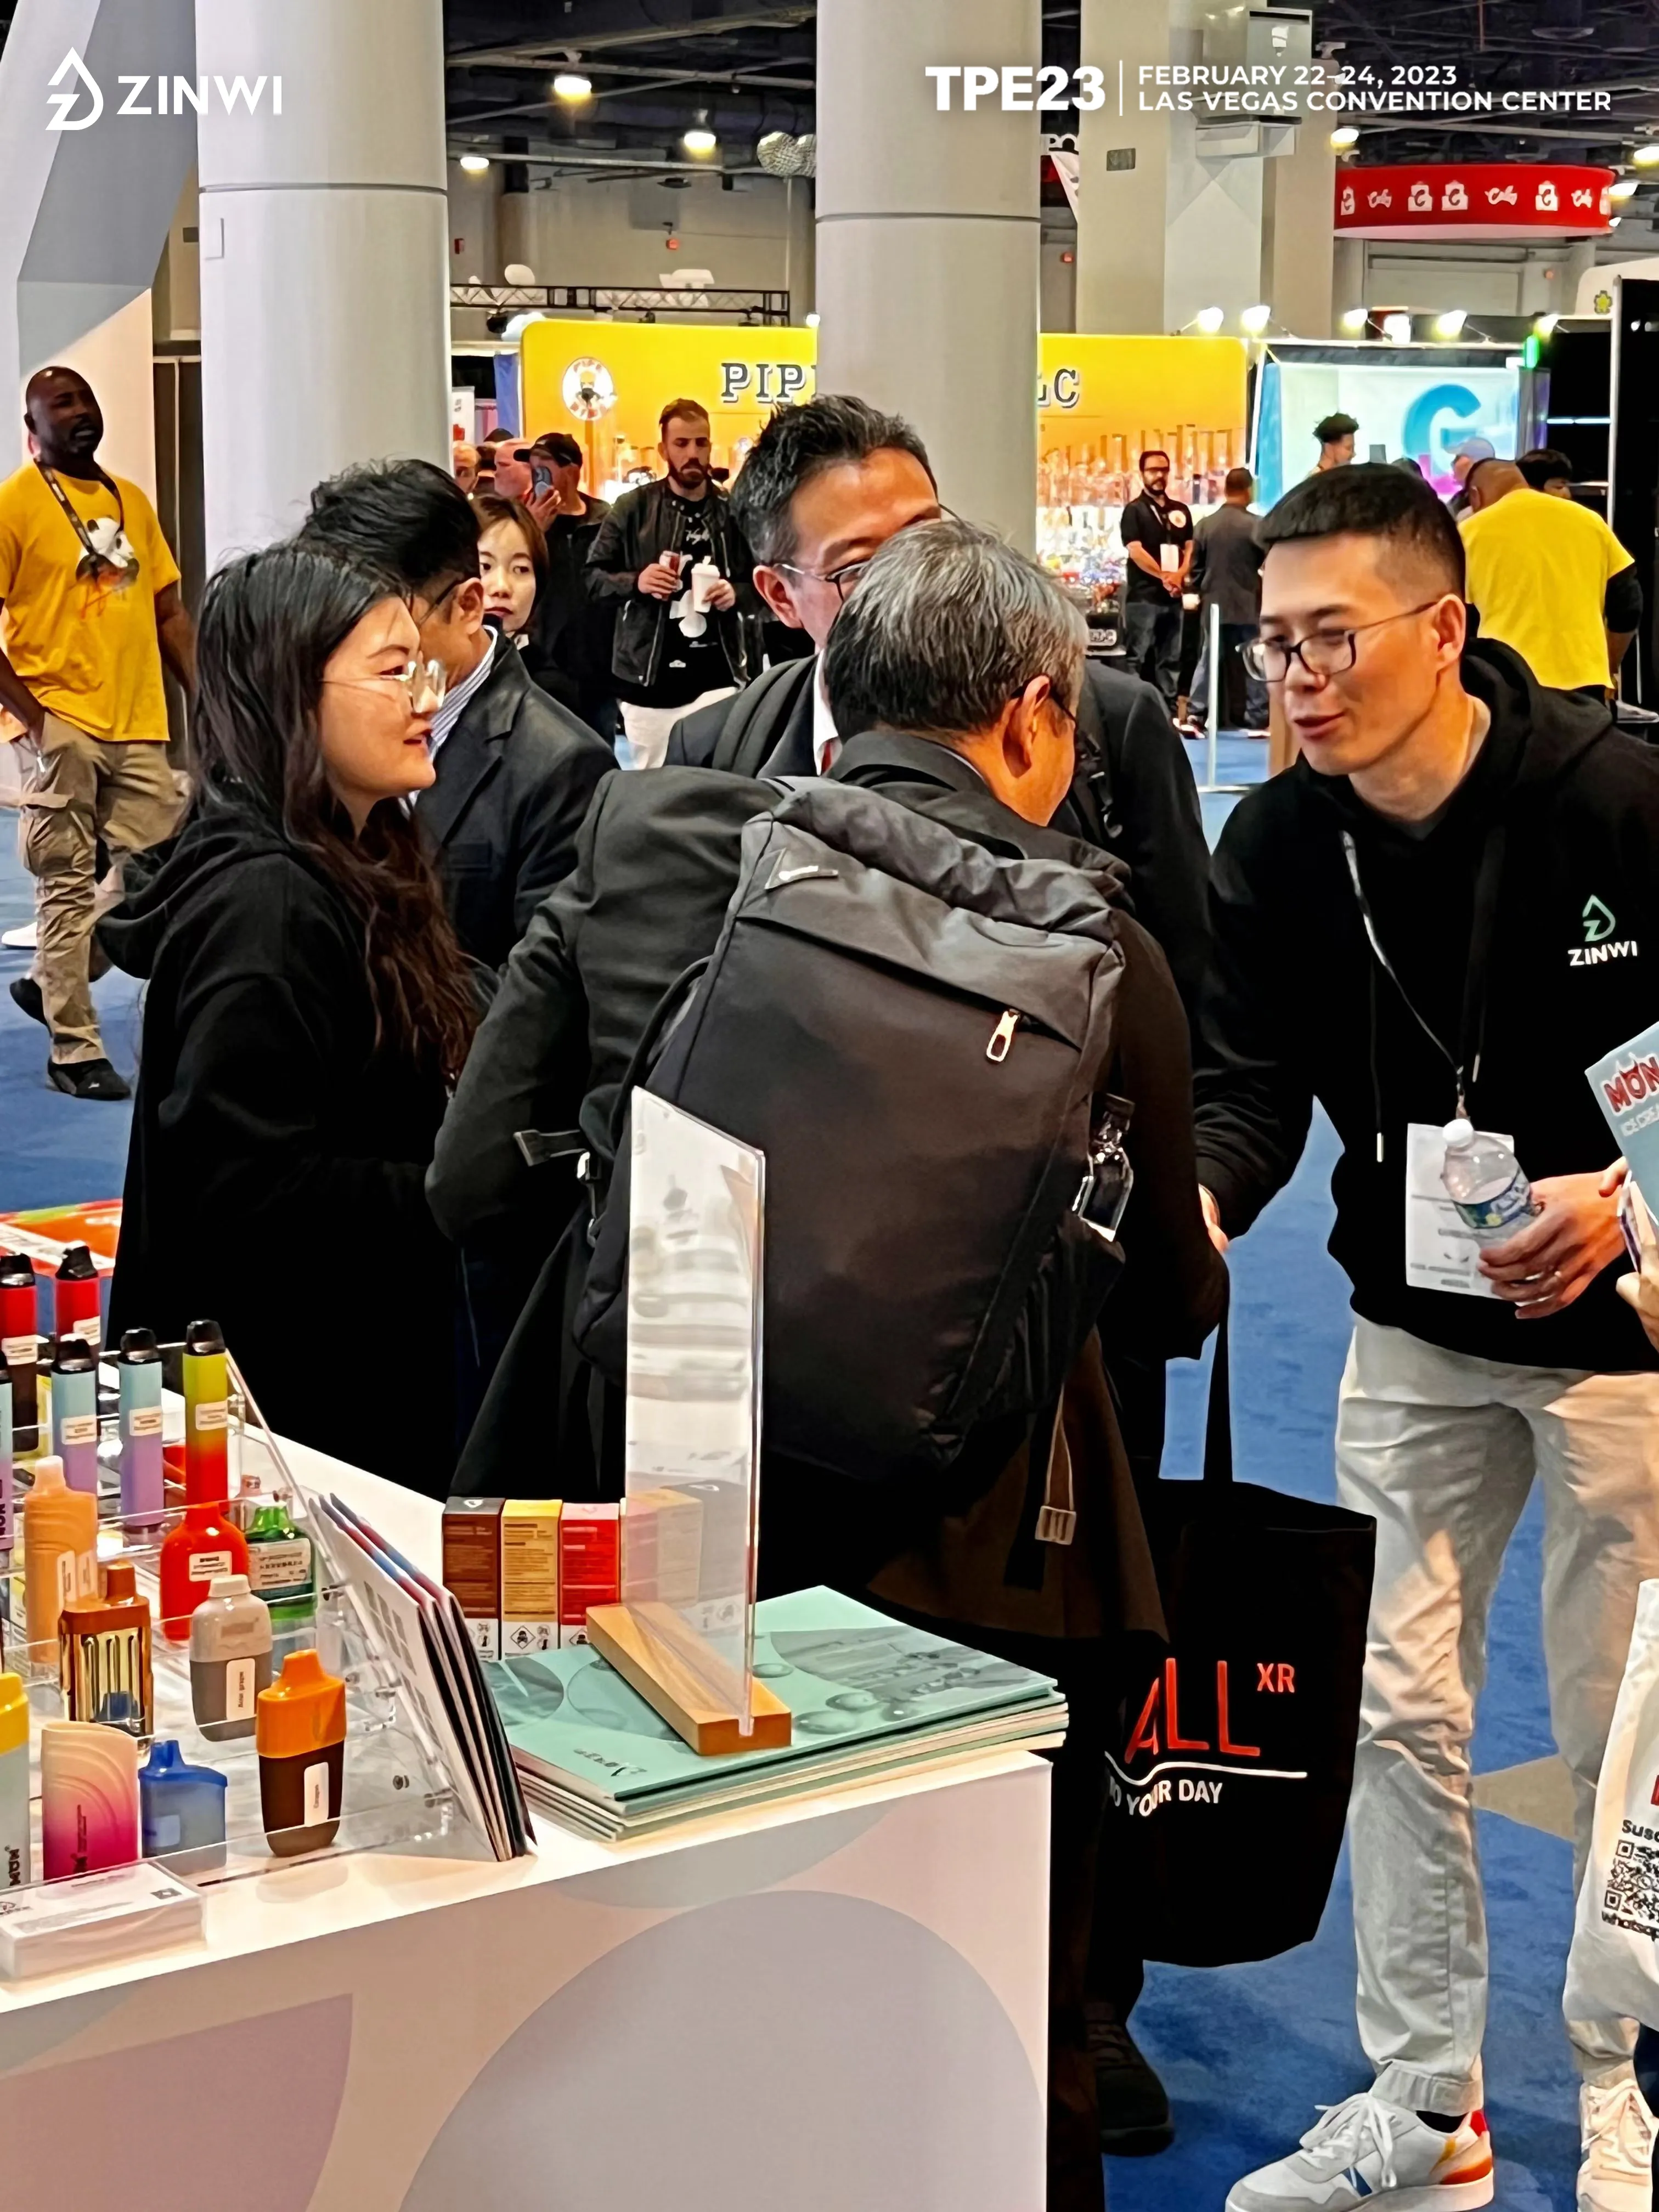 Zinwi Bio exhibited a variety of e-liquids